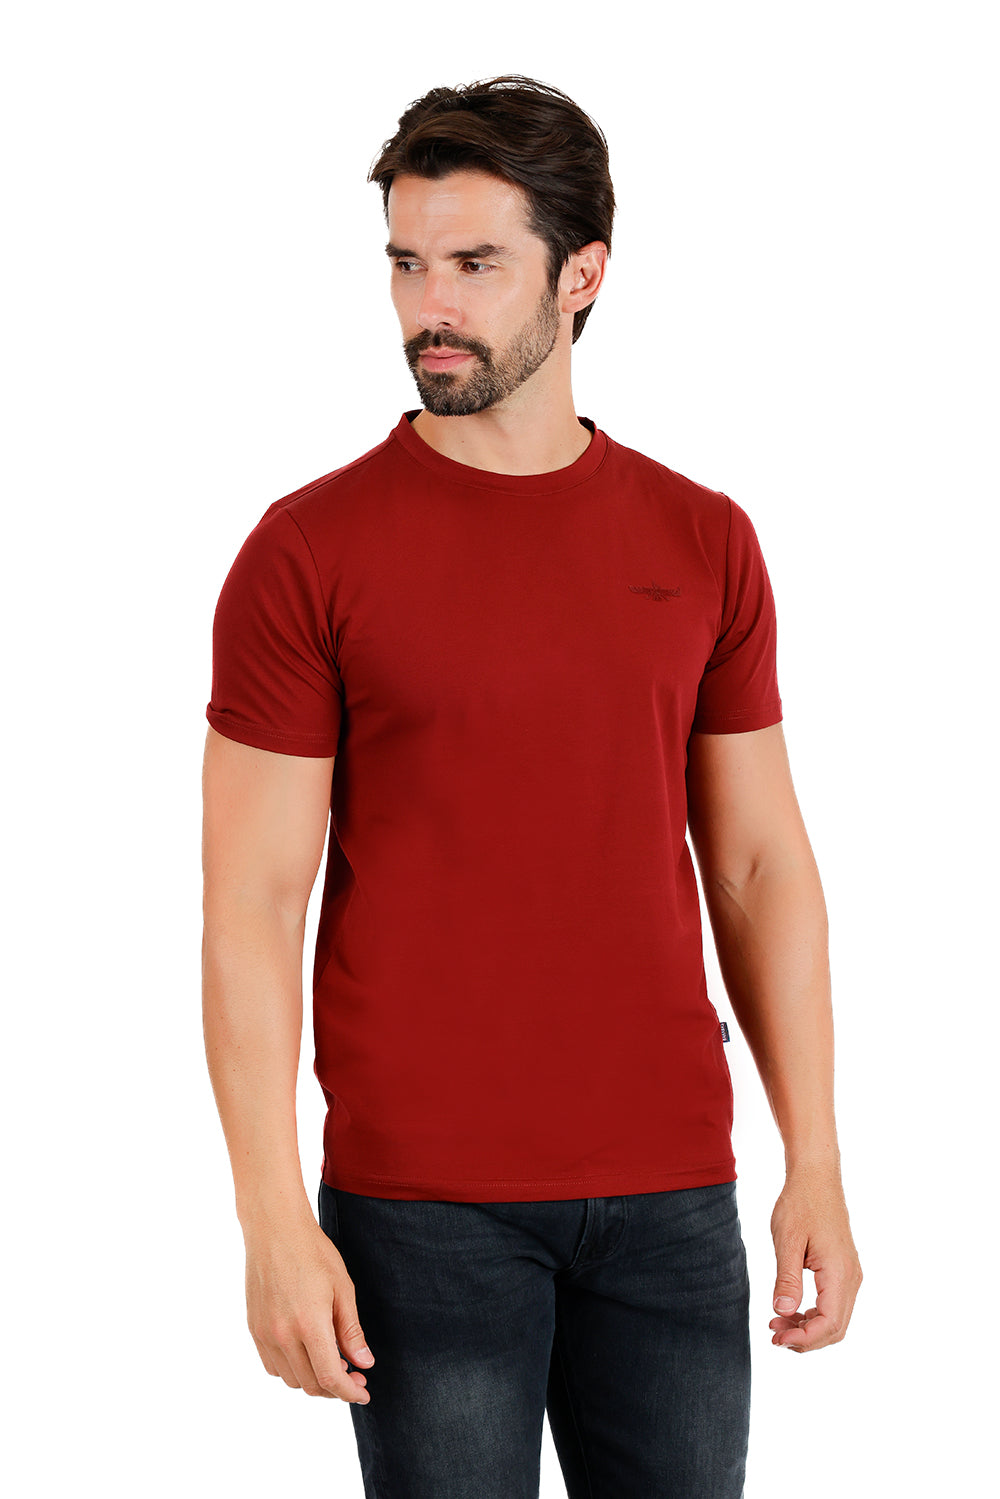 BARABAS Men's Basic Solid Color Premium Crew-Neck T-shirts ST933 Wine